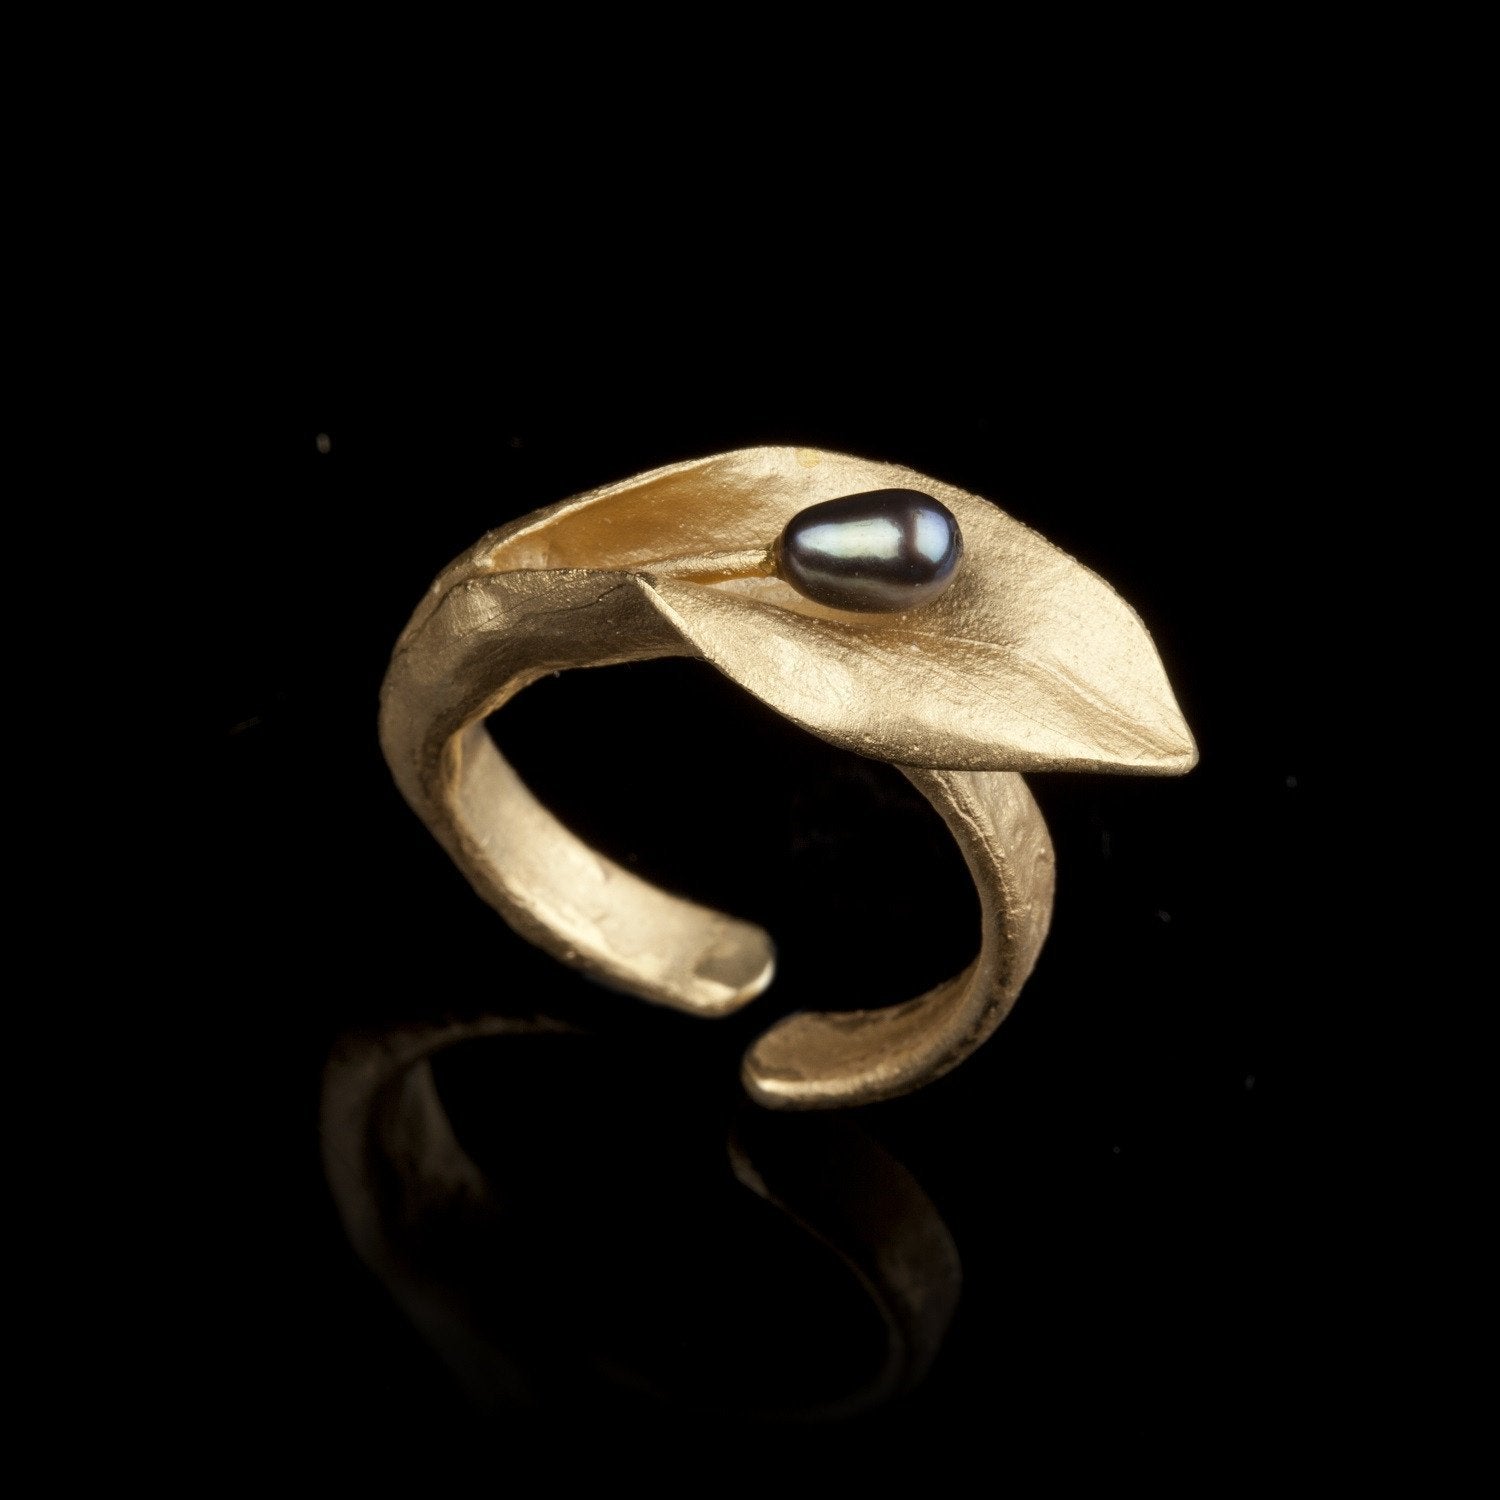 Hosta Ring - The Nancy Smillie Shop - Art, Jewellery & Designer Gifts Glasgow